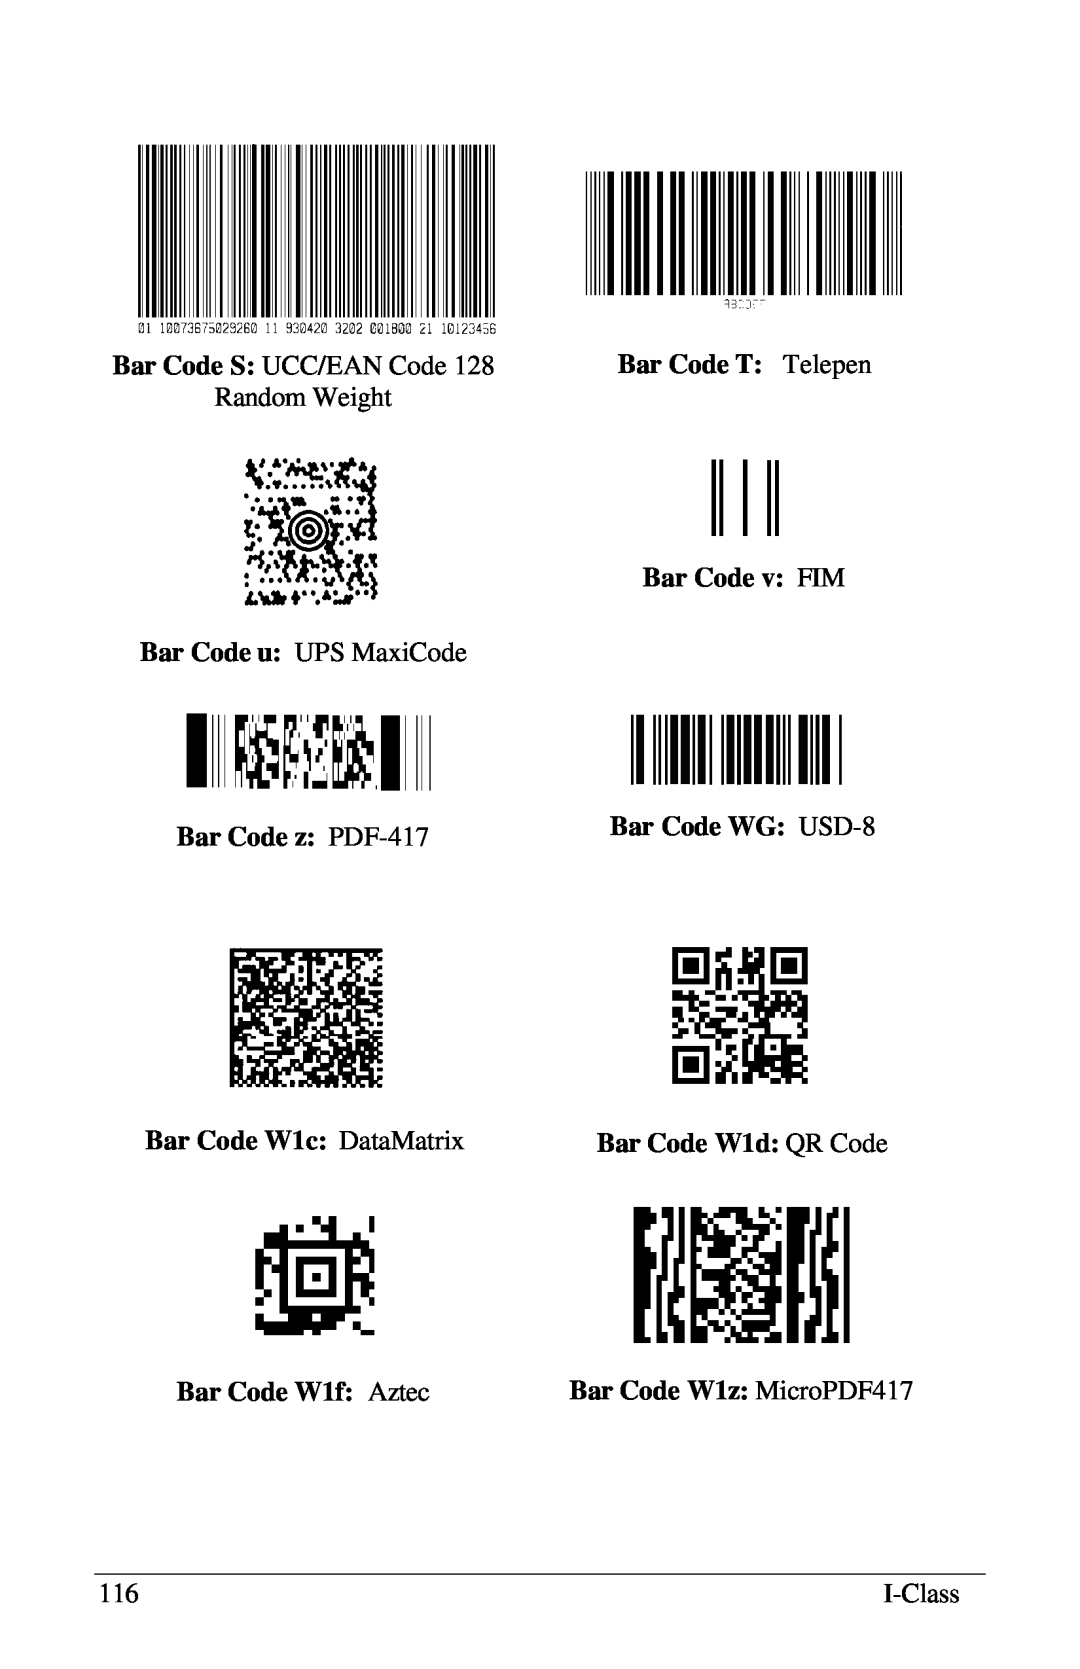 Xerox I Class manual Bar Code u: UPS MaxiCode Bar Code z: PDF-417, Bar Code W1c: DataMatrix Bar Code W1f: Aztec 